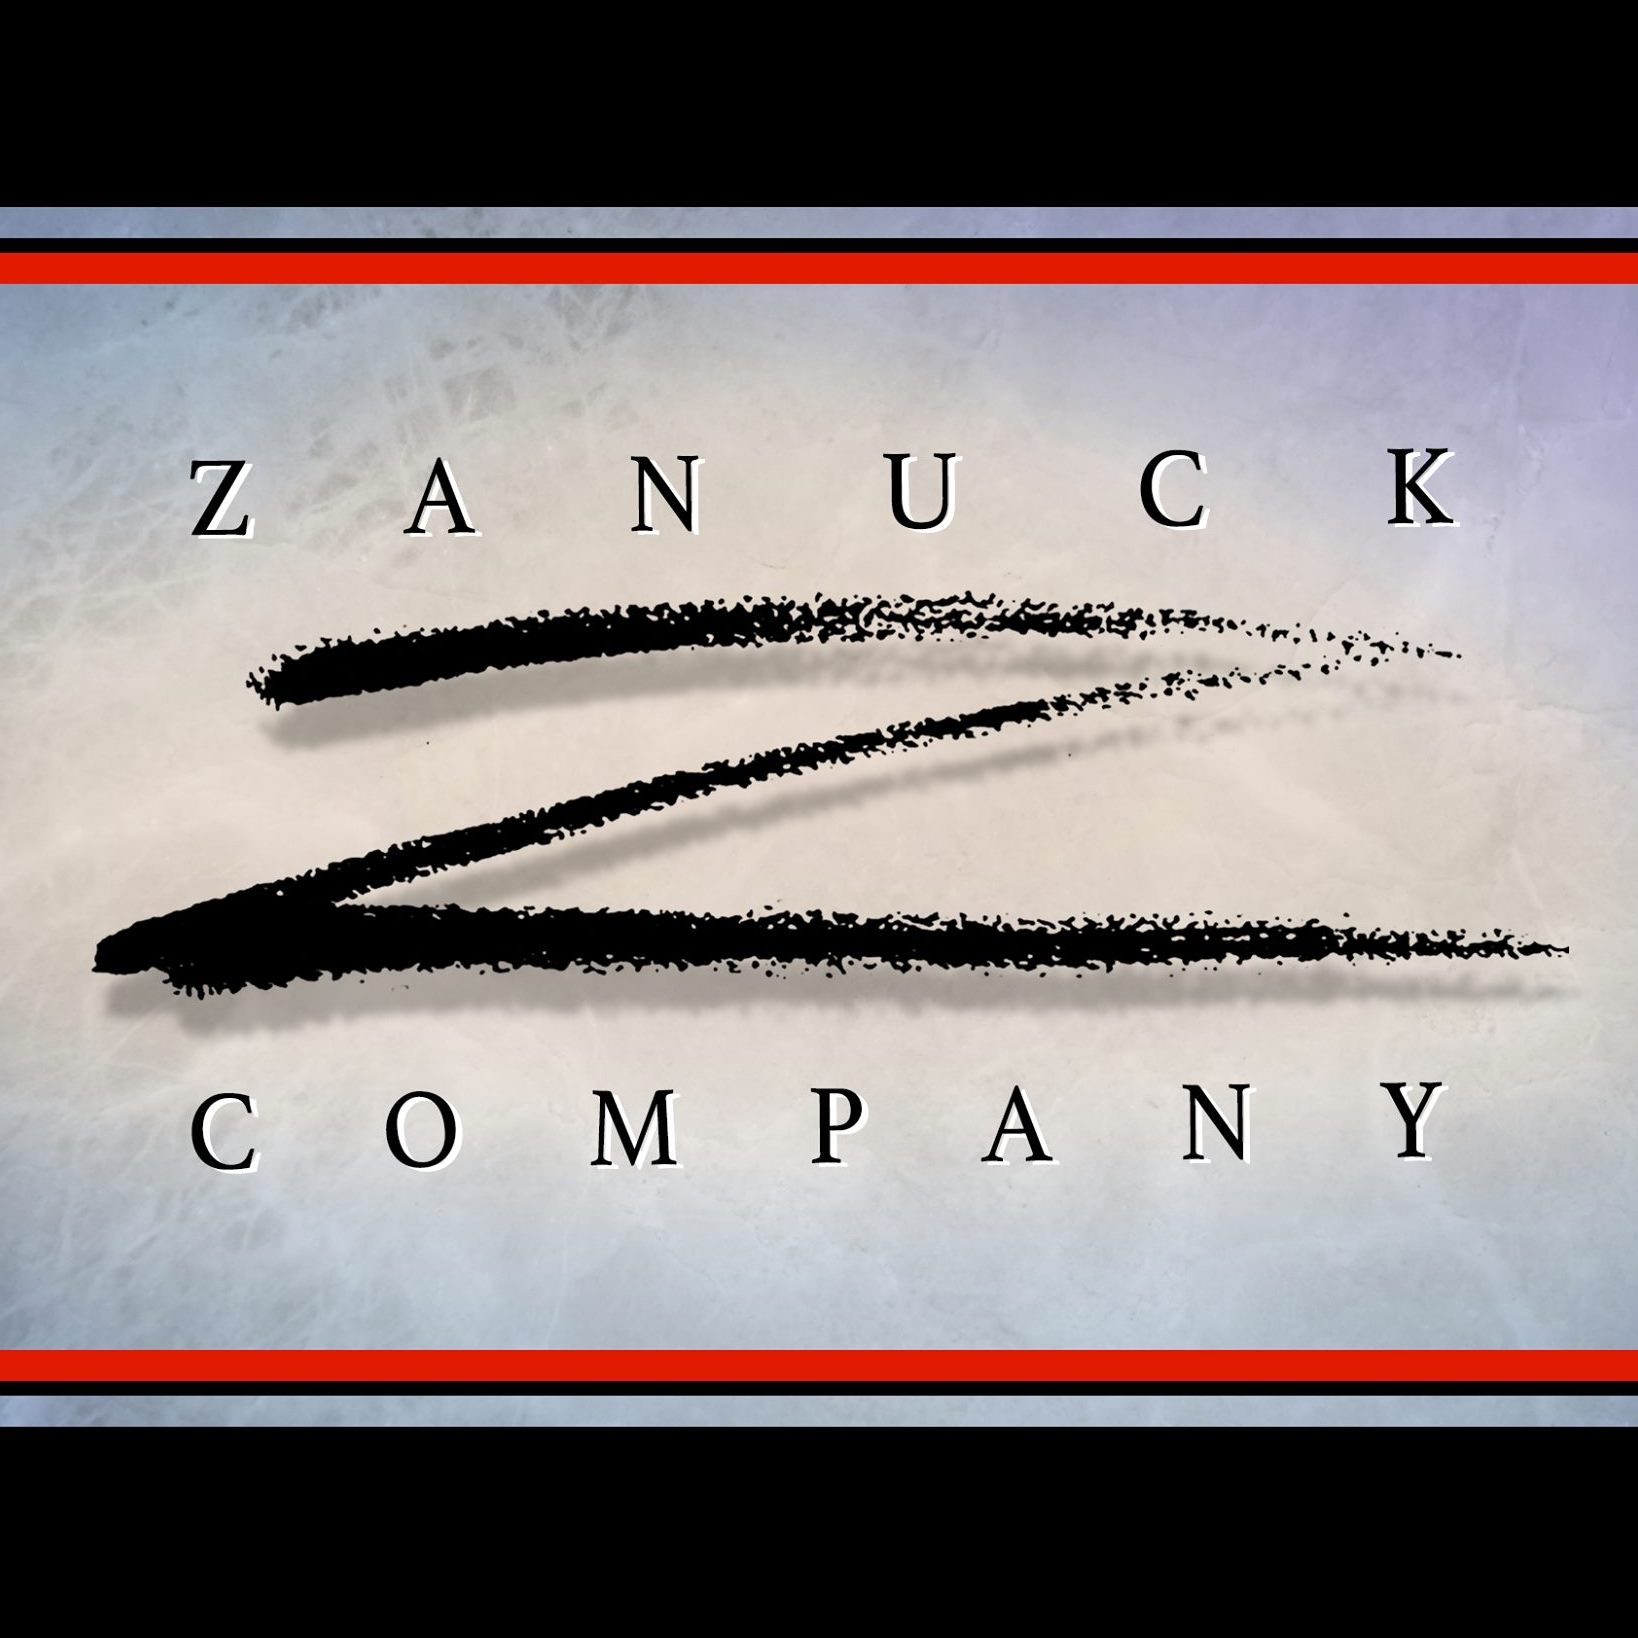 The Zanuck Company